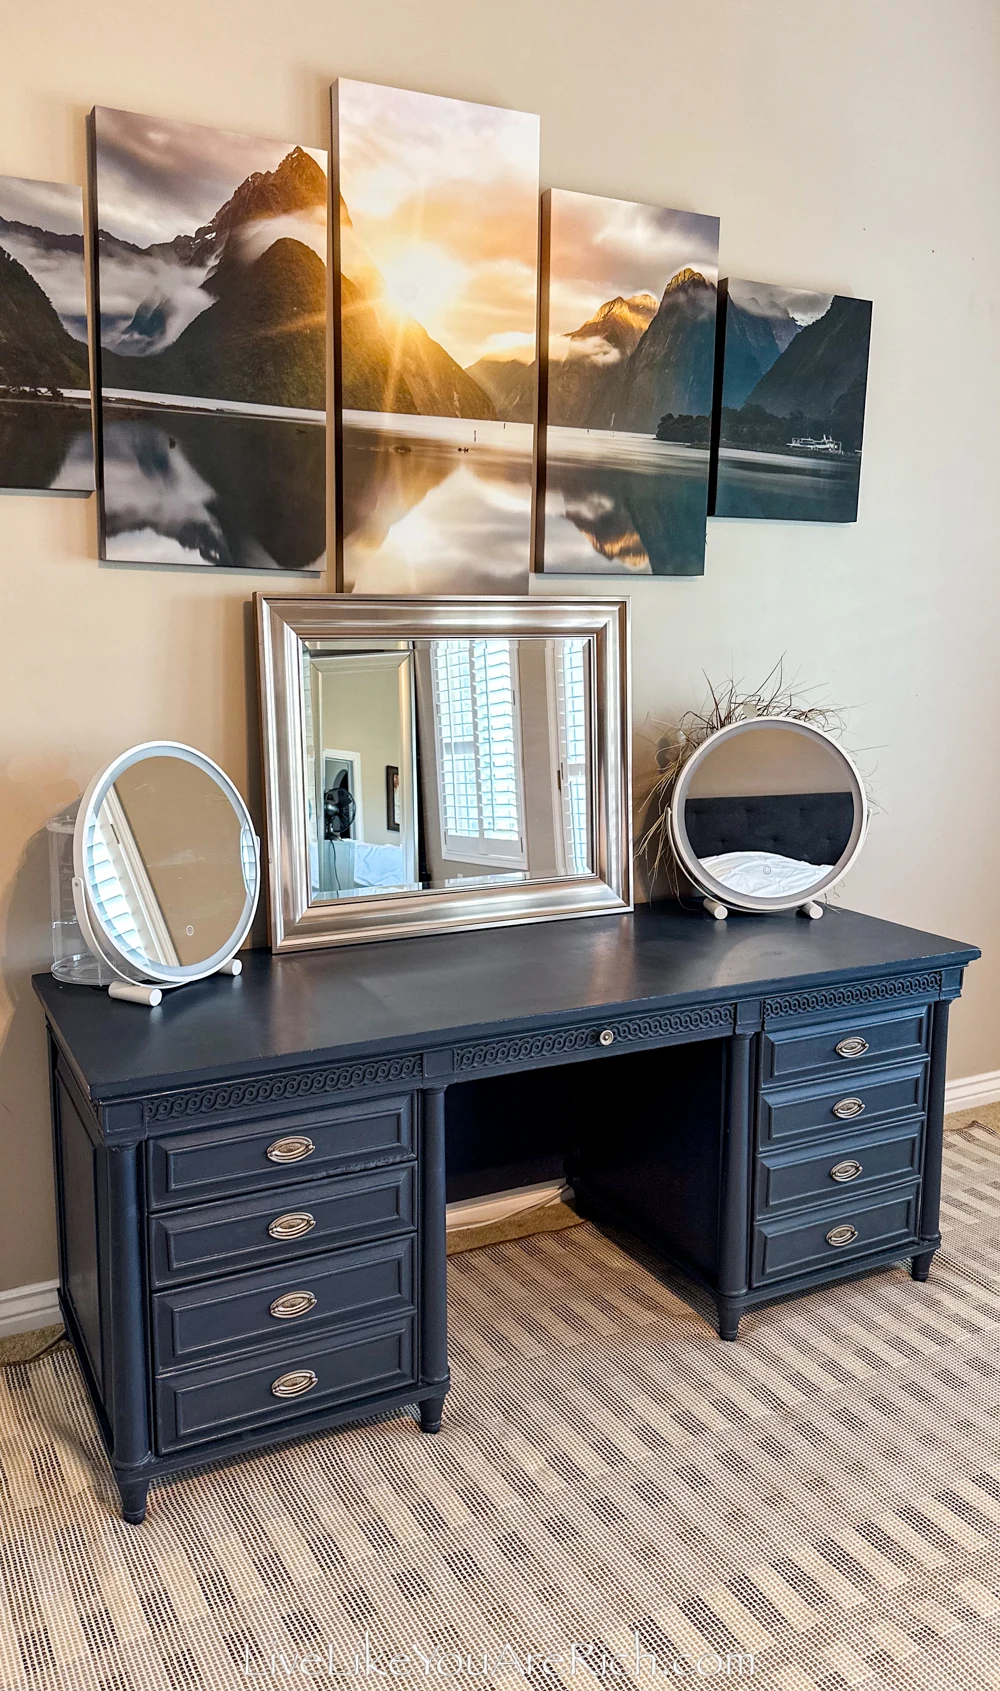 DIY Desk to Vanity Transformation After